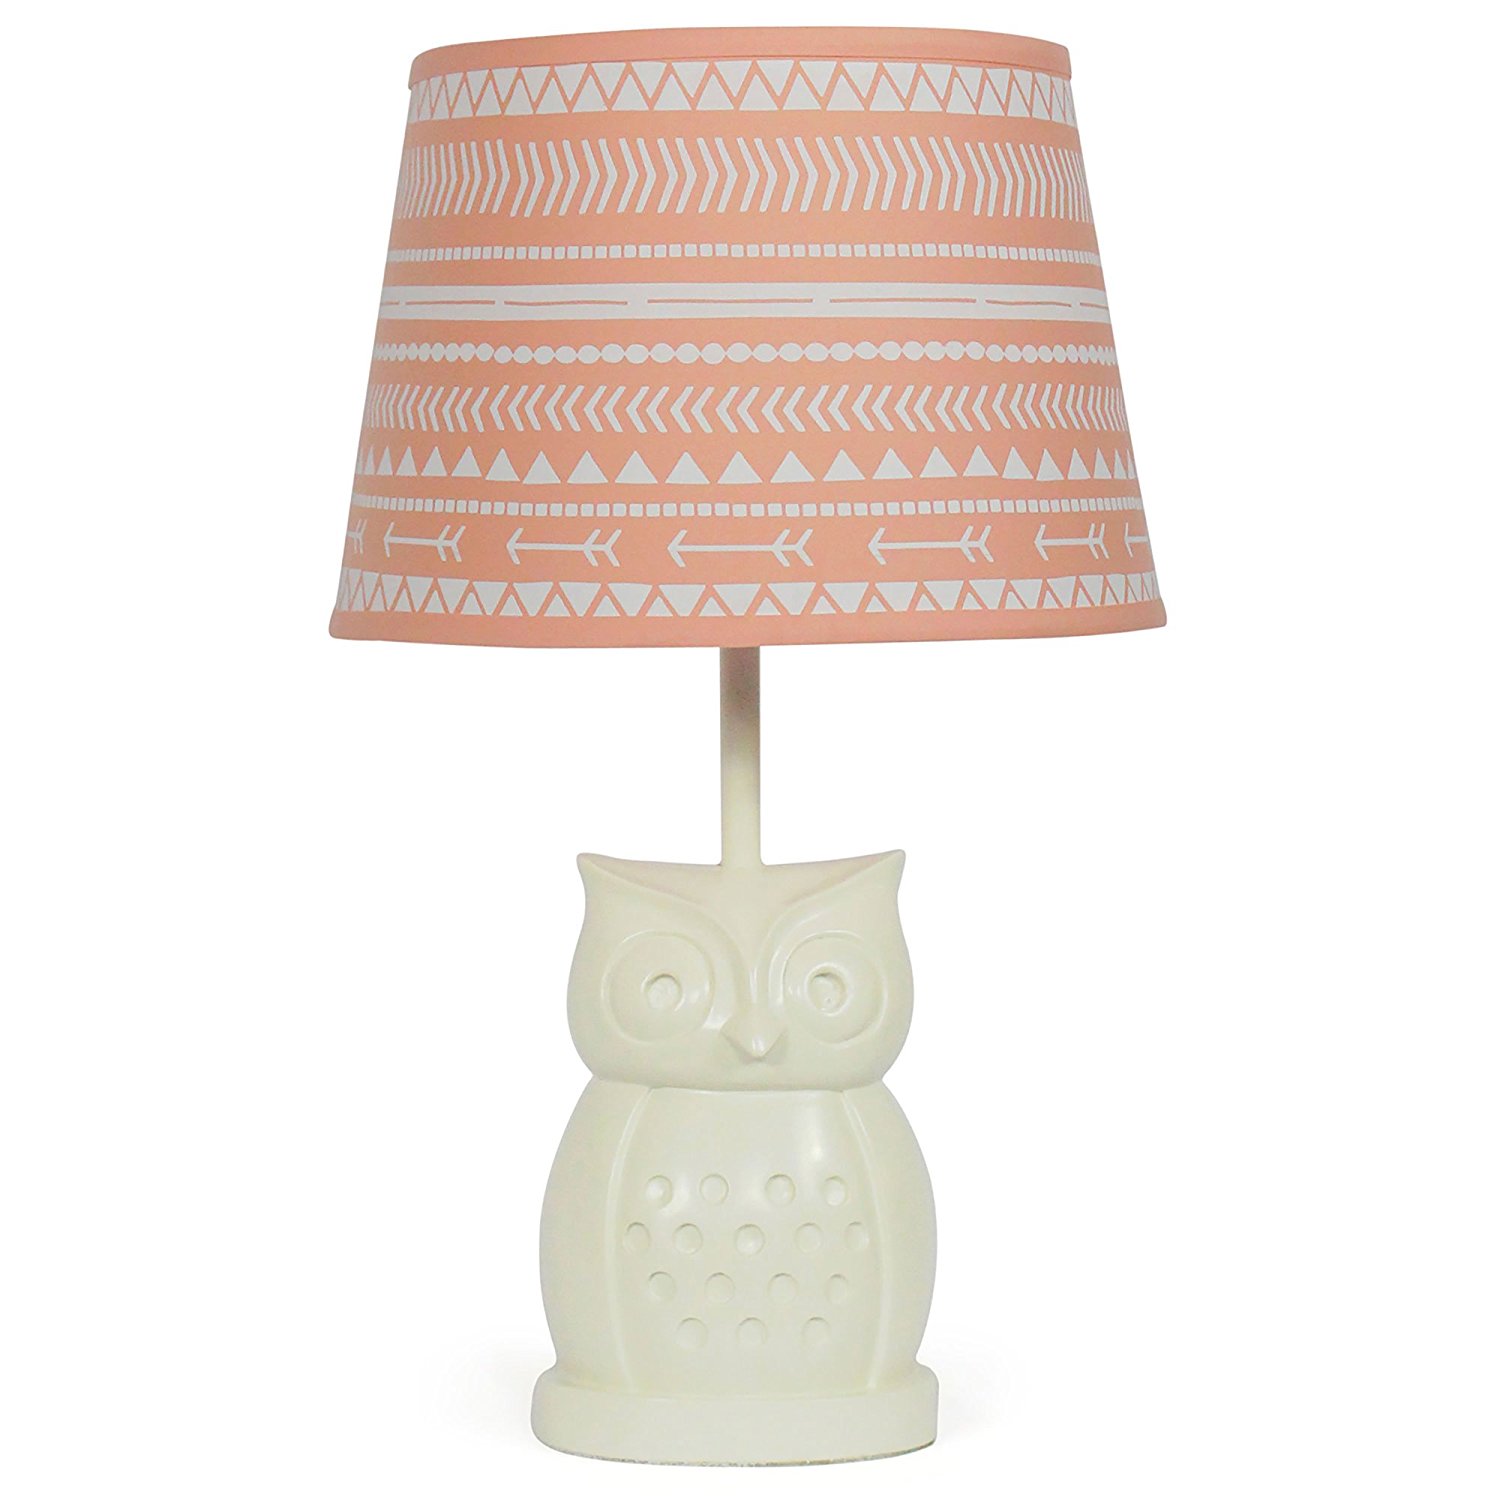 Amazon.com : Coral Tribal Nursery Lamp Shade with White Owl Base ...